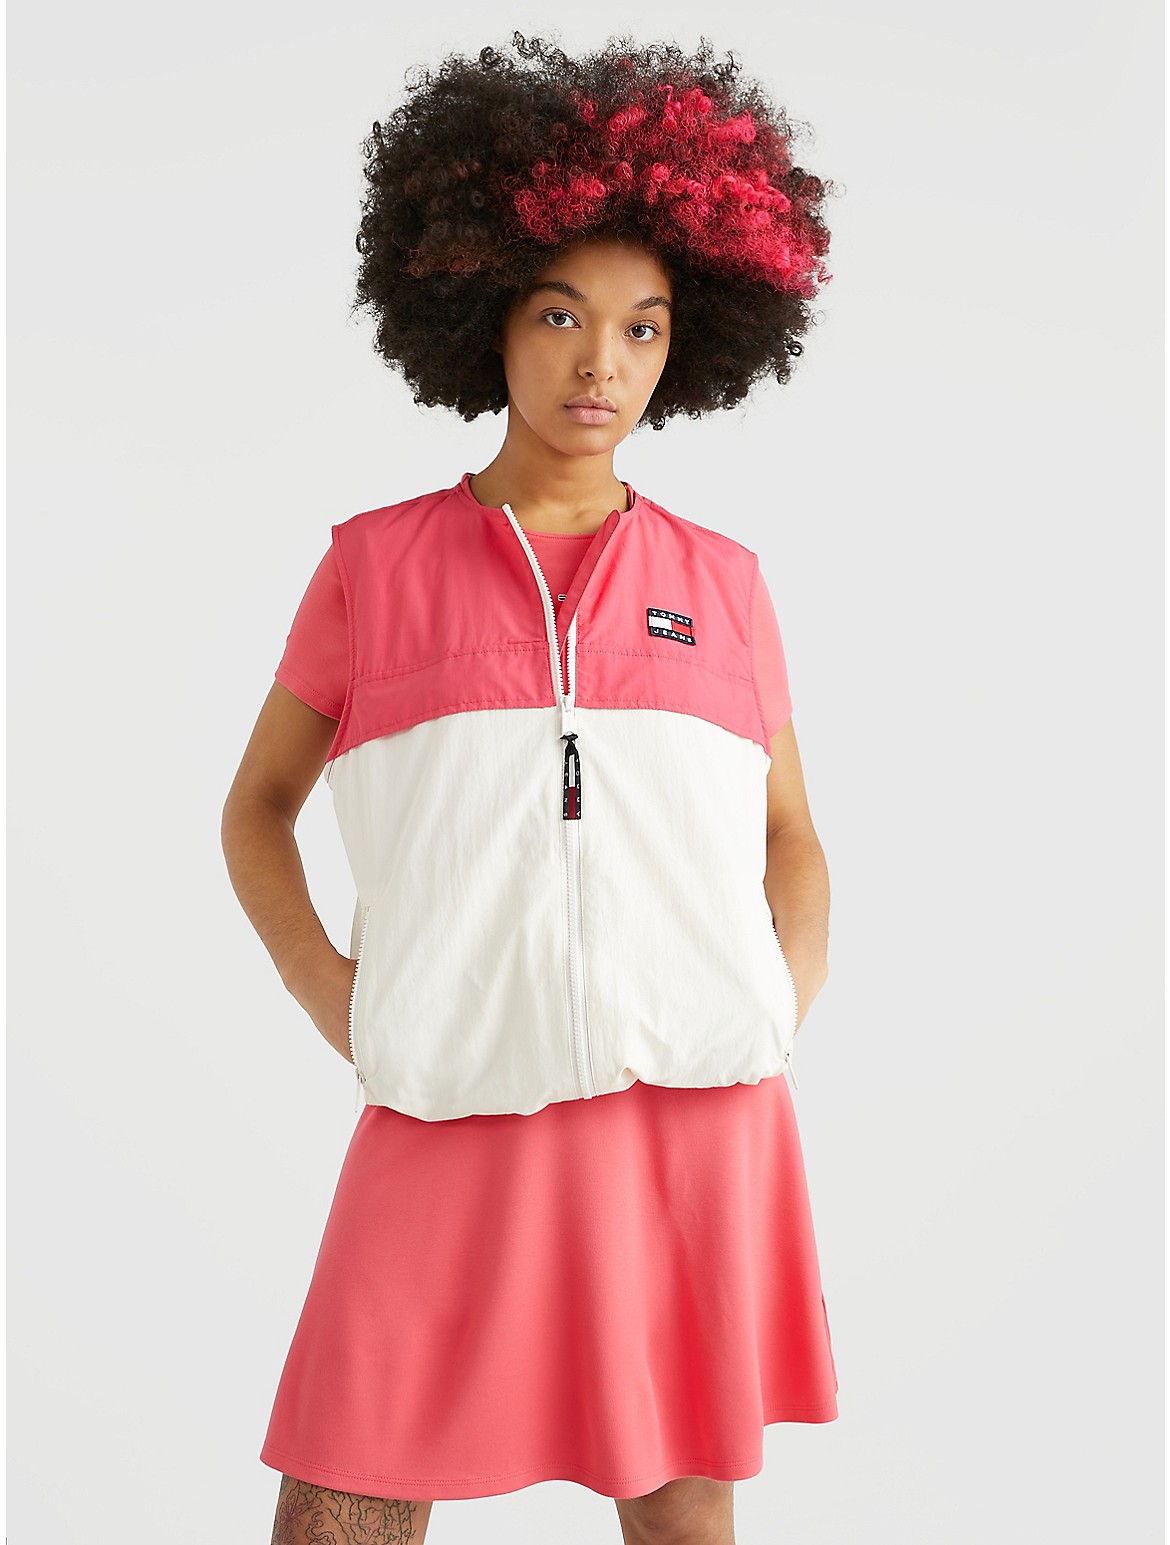 Tommy Hilfiger Women's Chicago Colorblock Vest Windbreaker - Pink - M